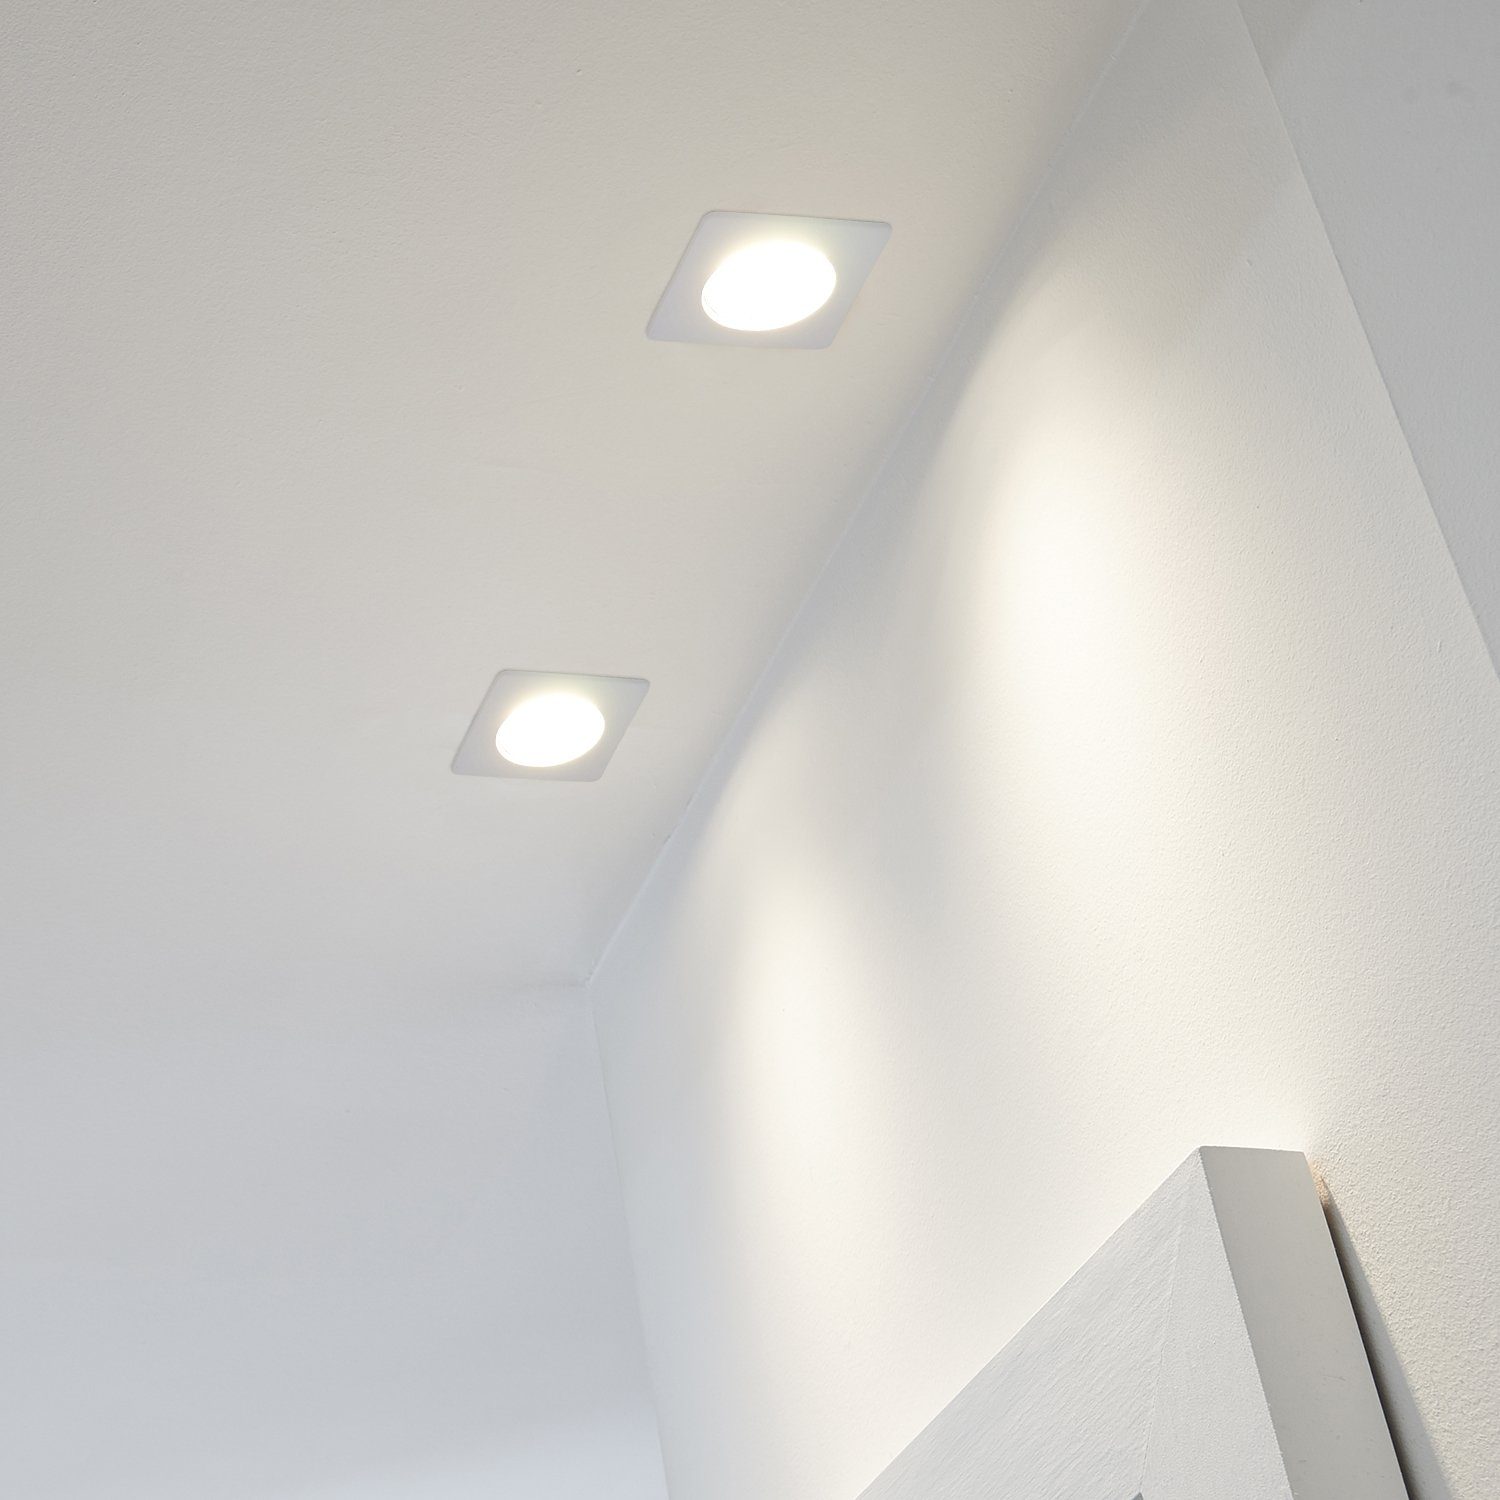 LED Einbaustrahler Einbaustrahler von LEDAND LED LEDANDO Set LED Weiß mit Markenstrahler GU10 3er